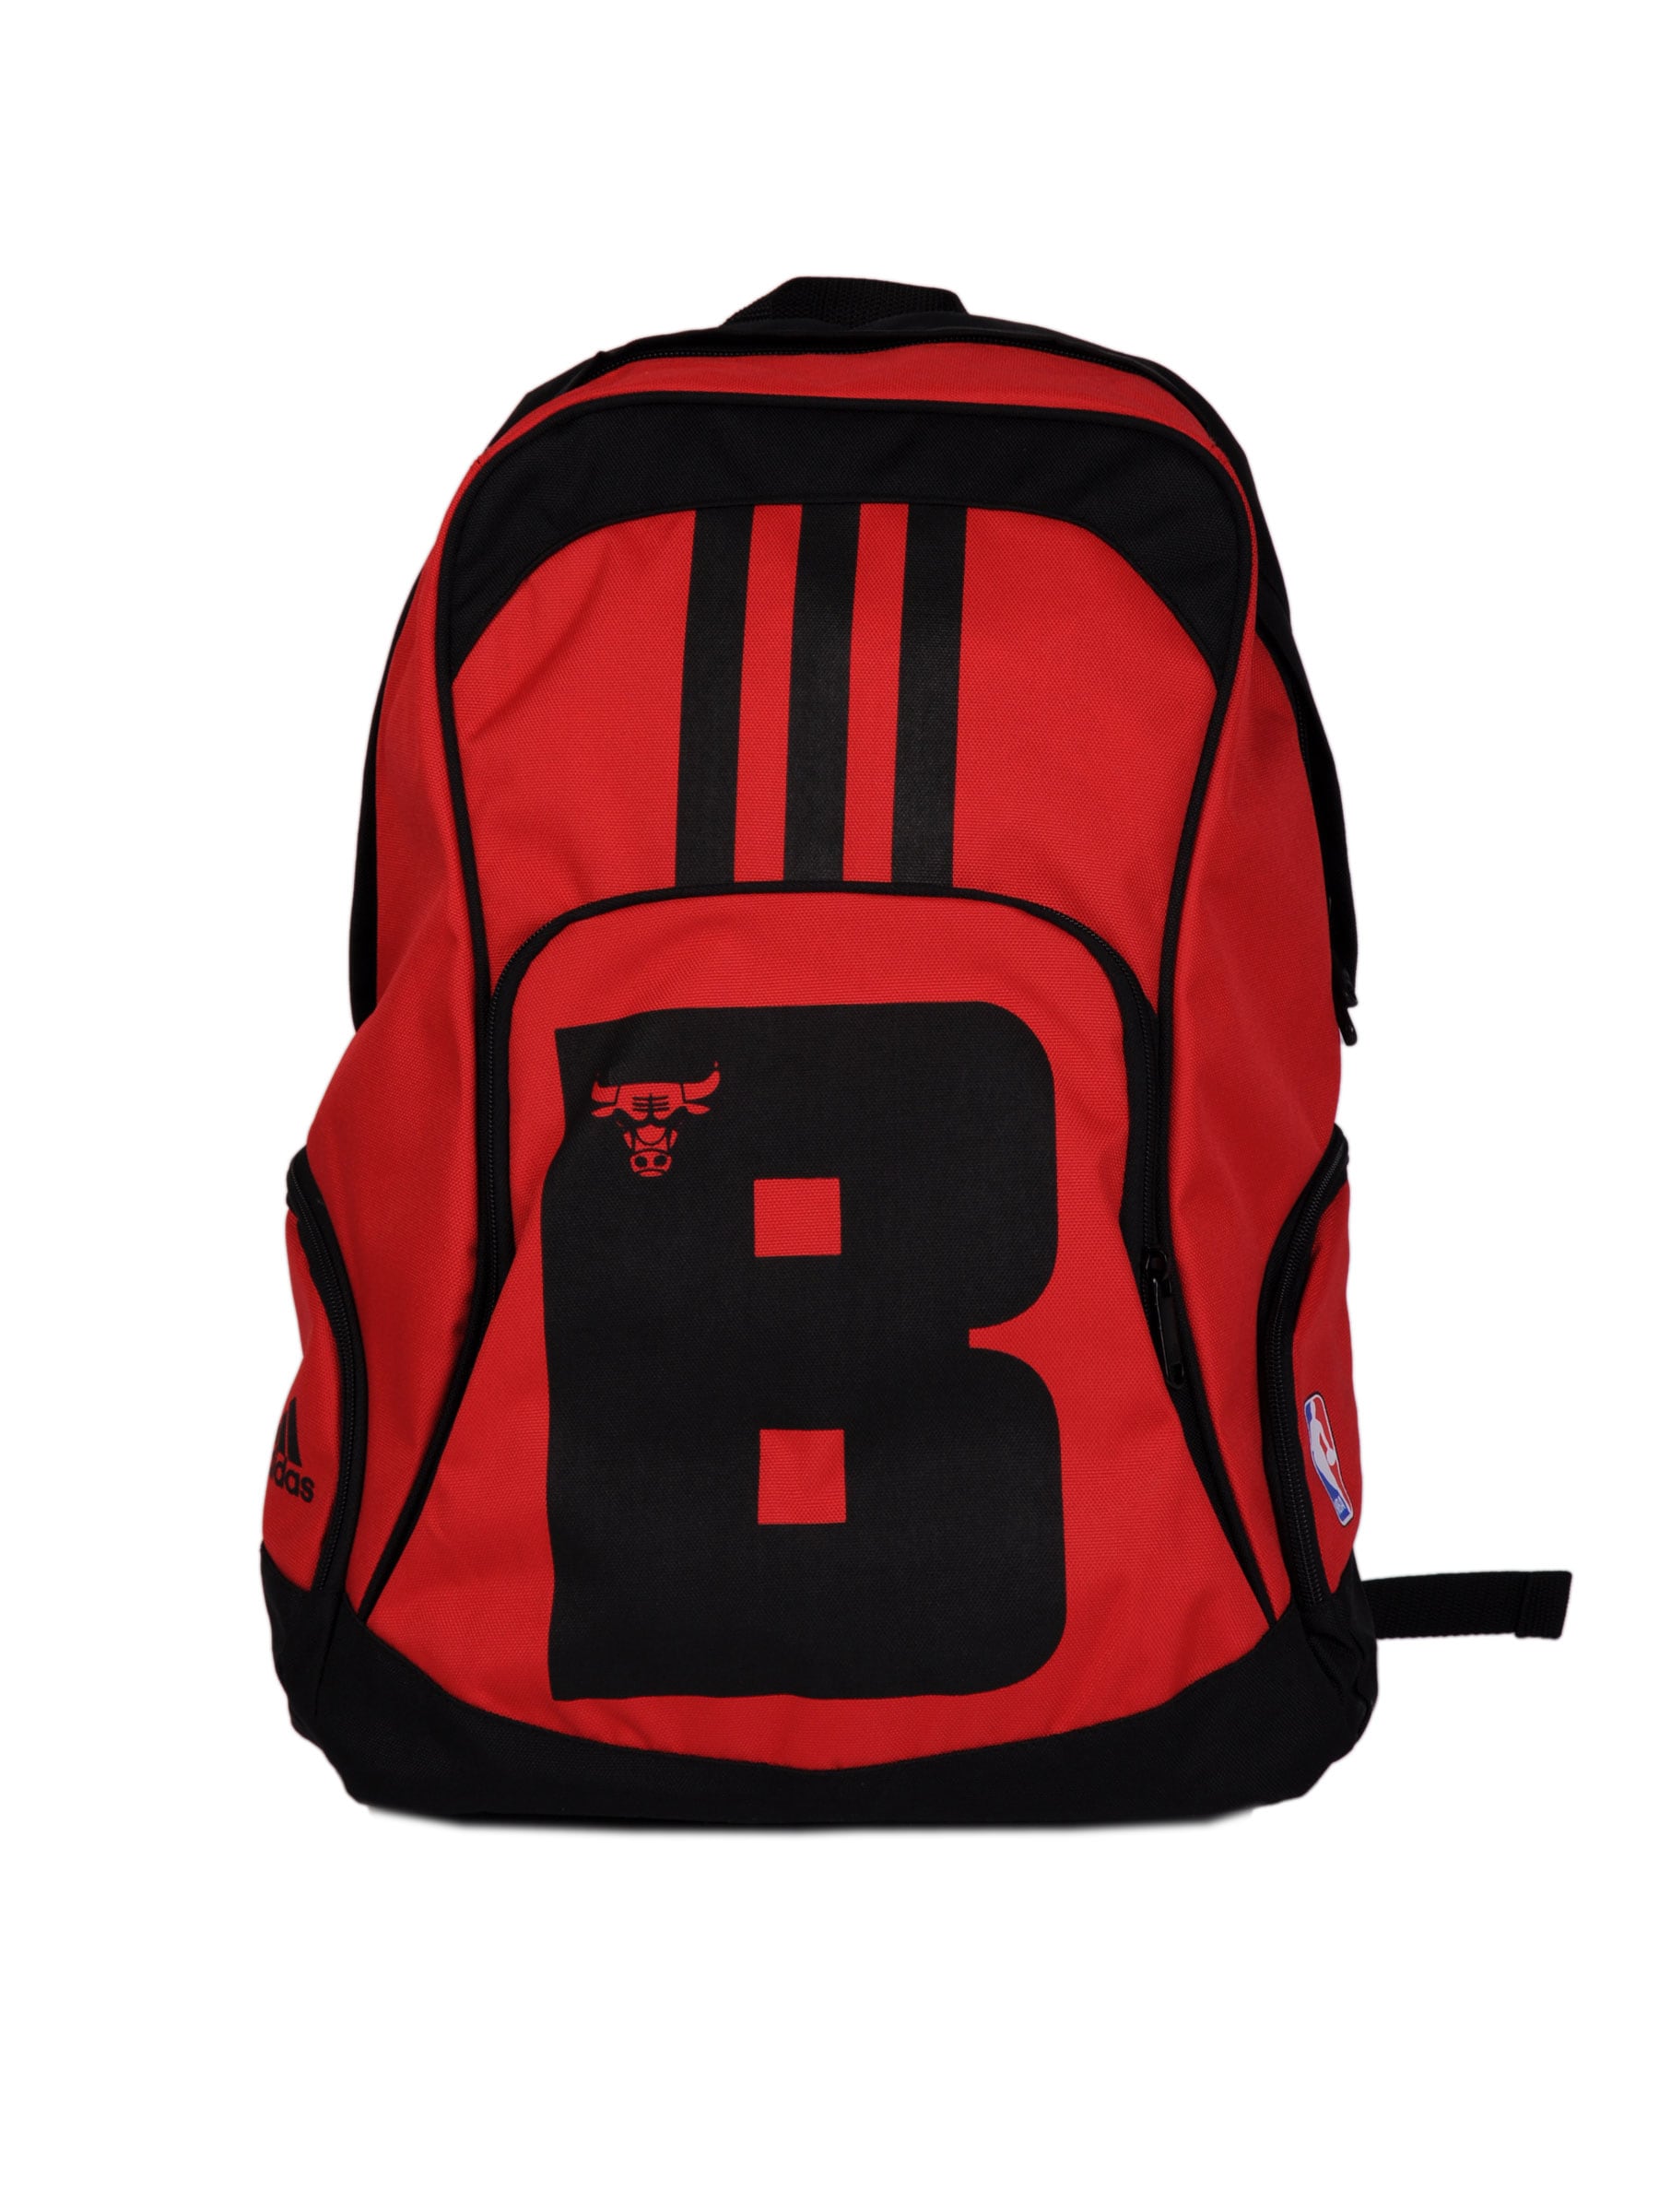 ADIDAS Unisex NBA Bulls BP Red Backpacks